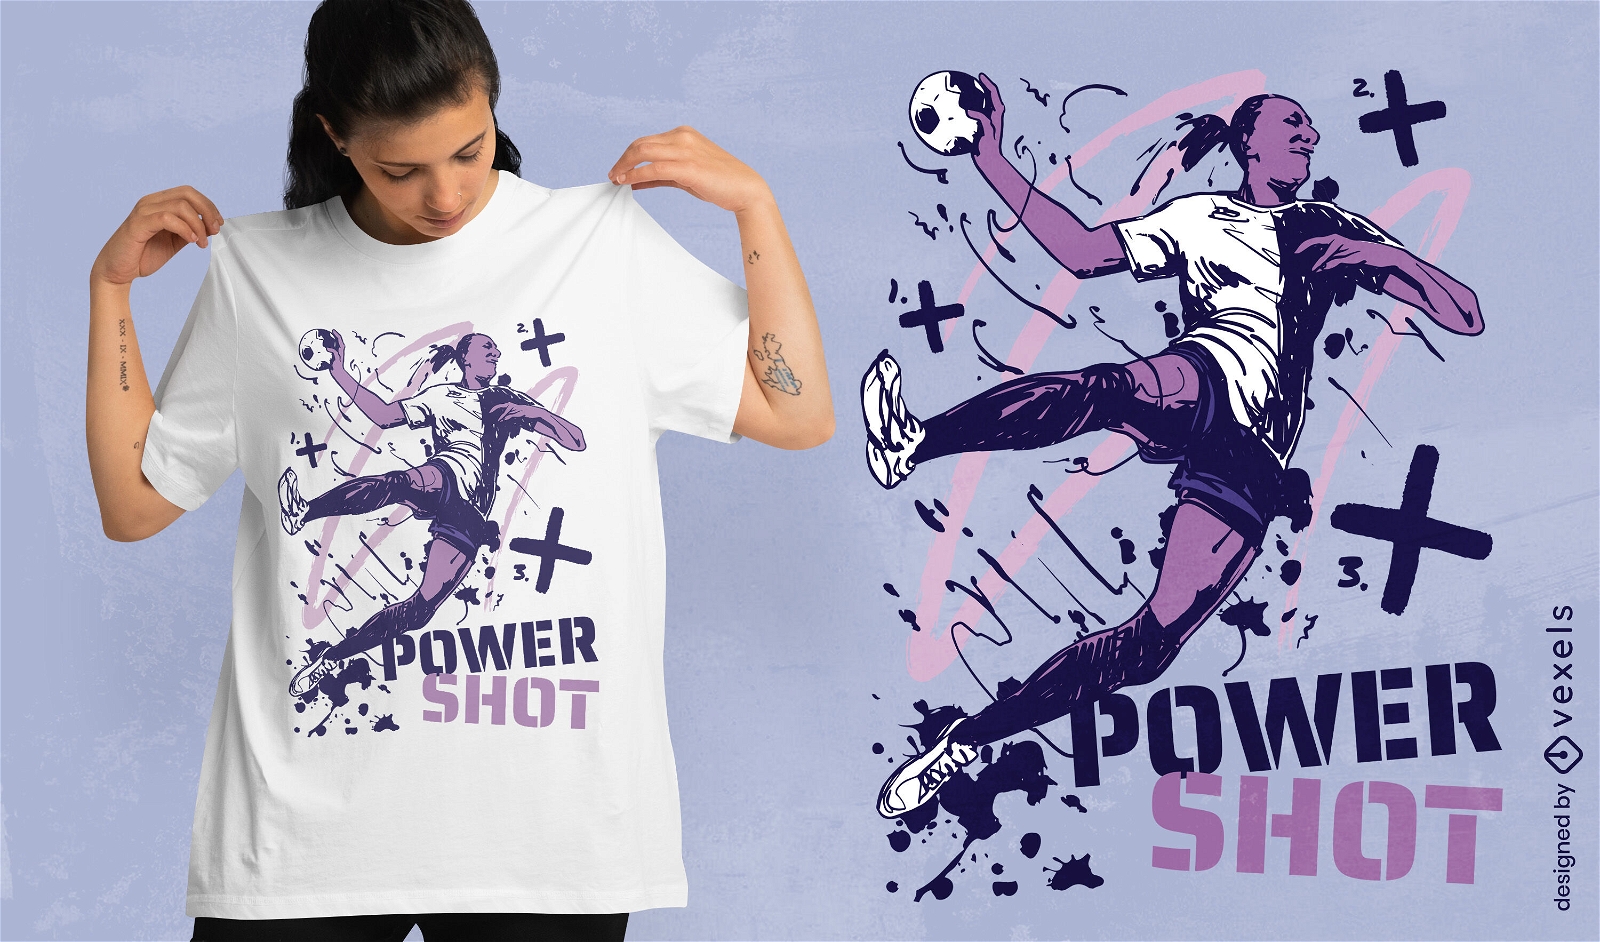 Handball female player t-shirt design